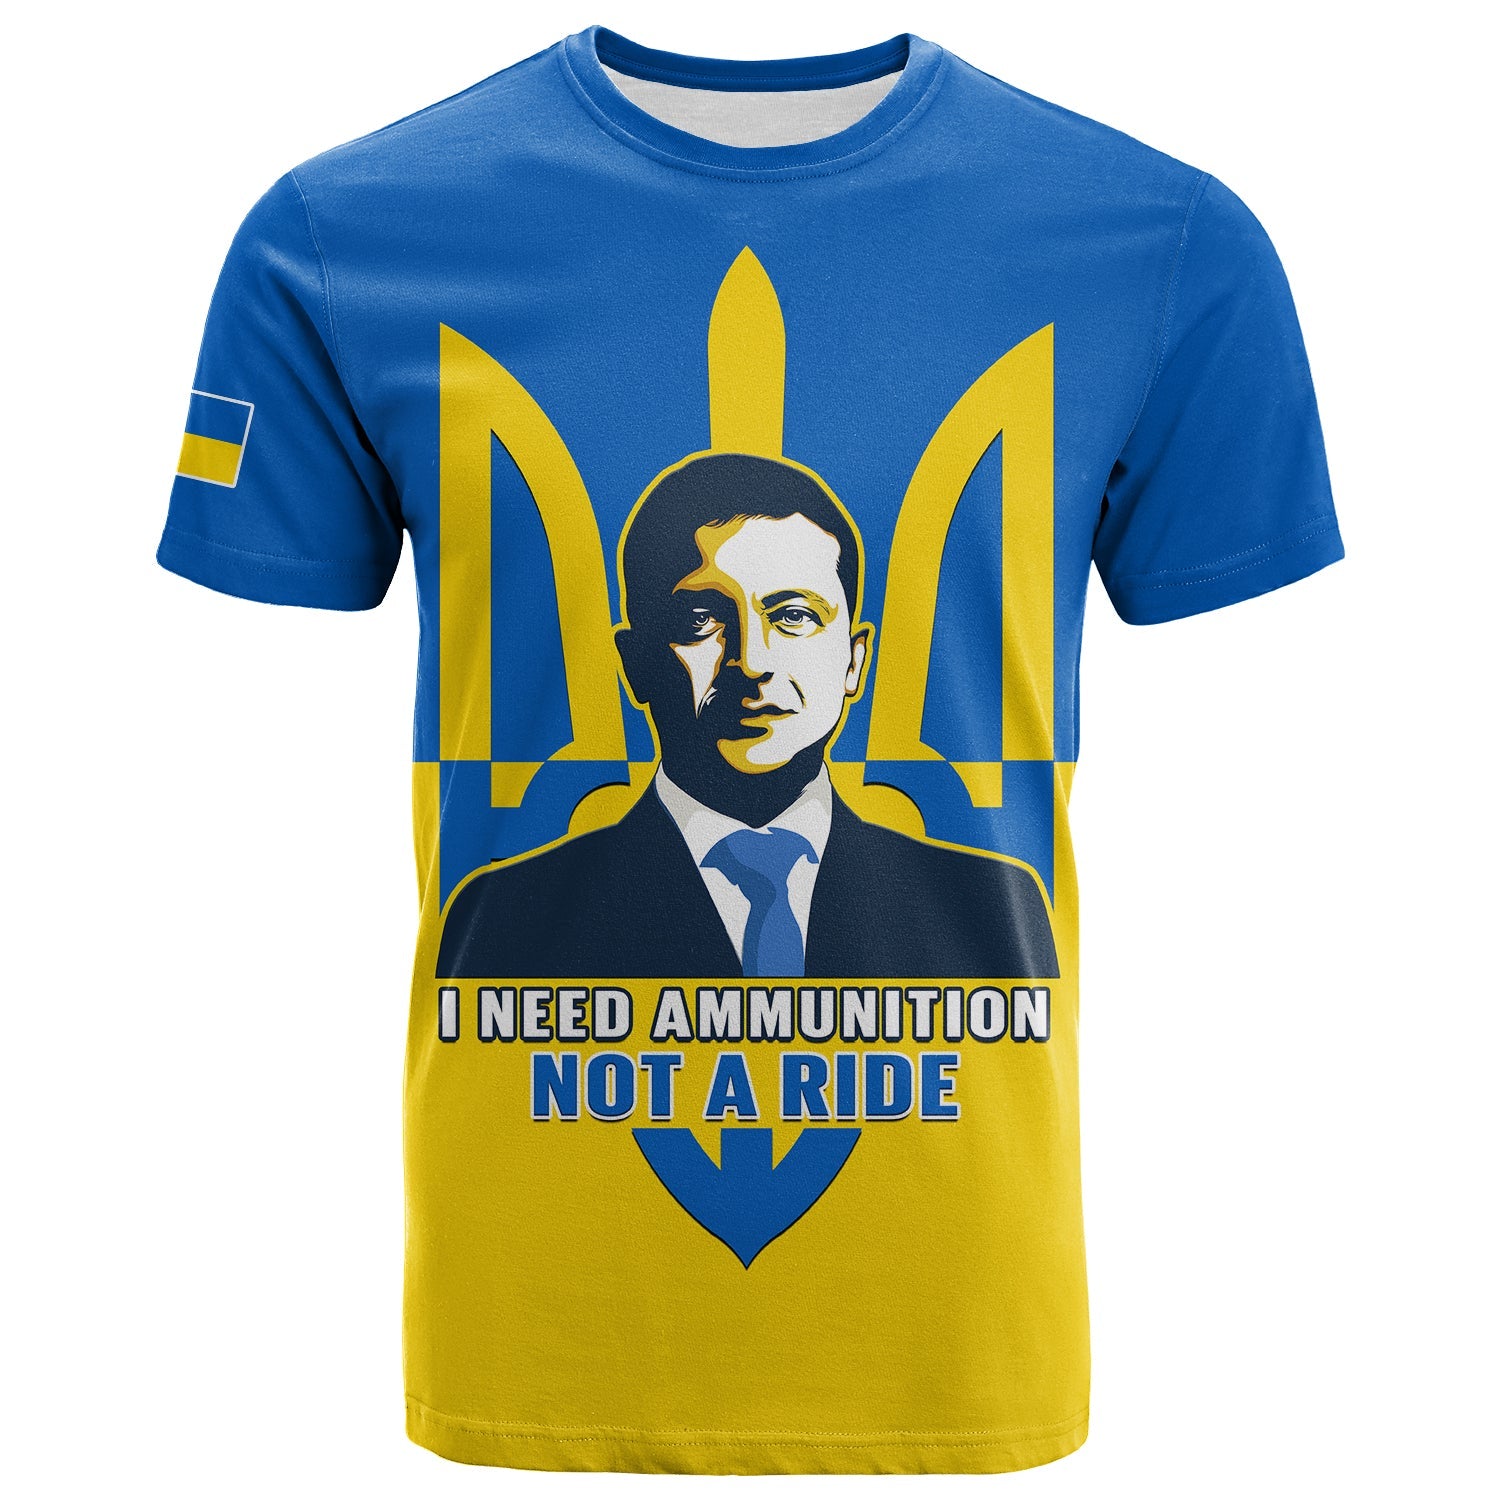 ukraine-t-shirt-ukrainian-president-i-need-ammunition-not-a-ride-blue